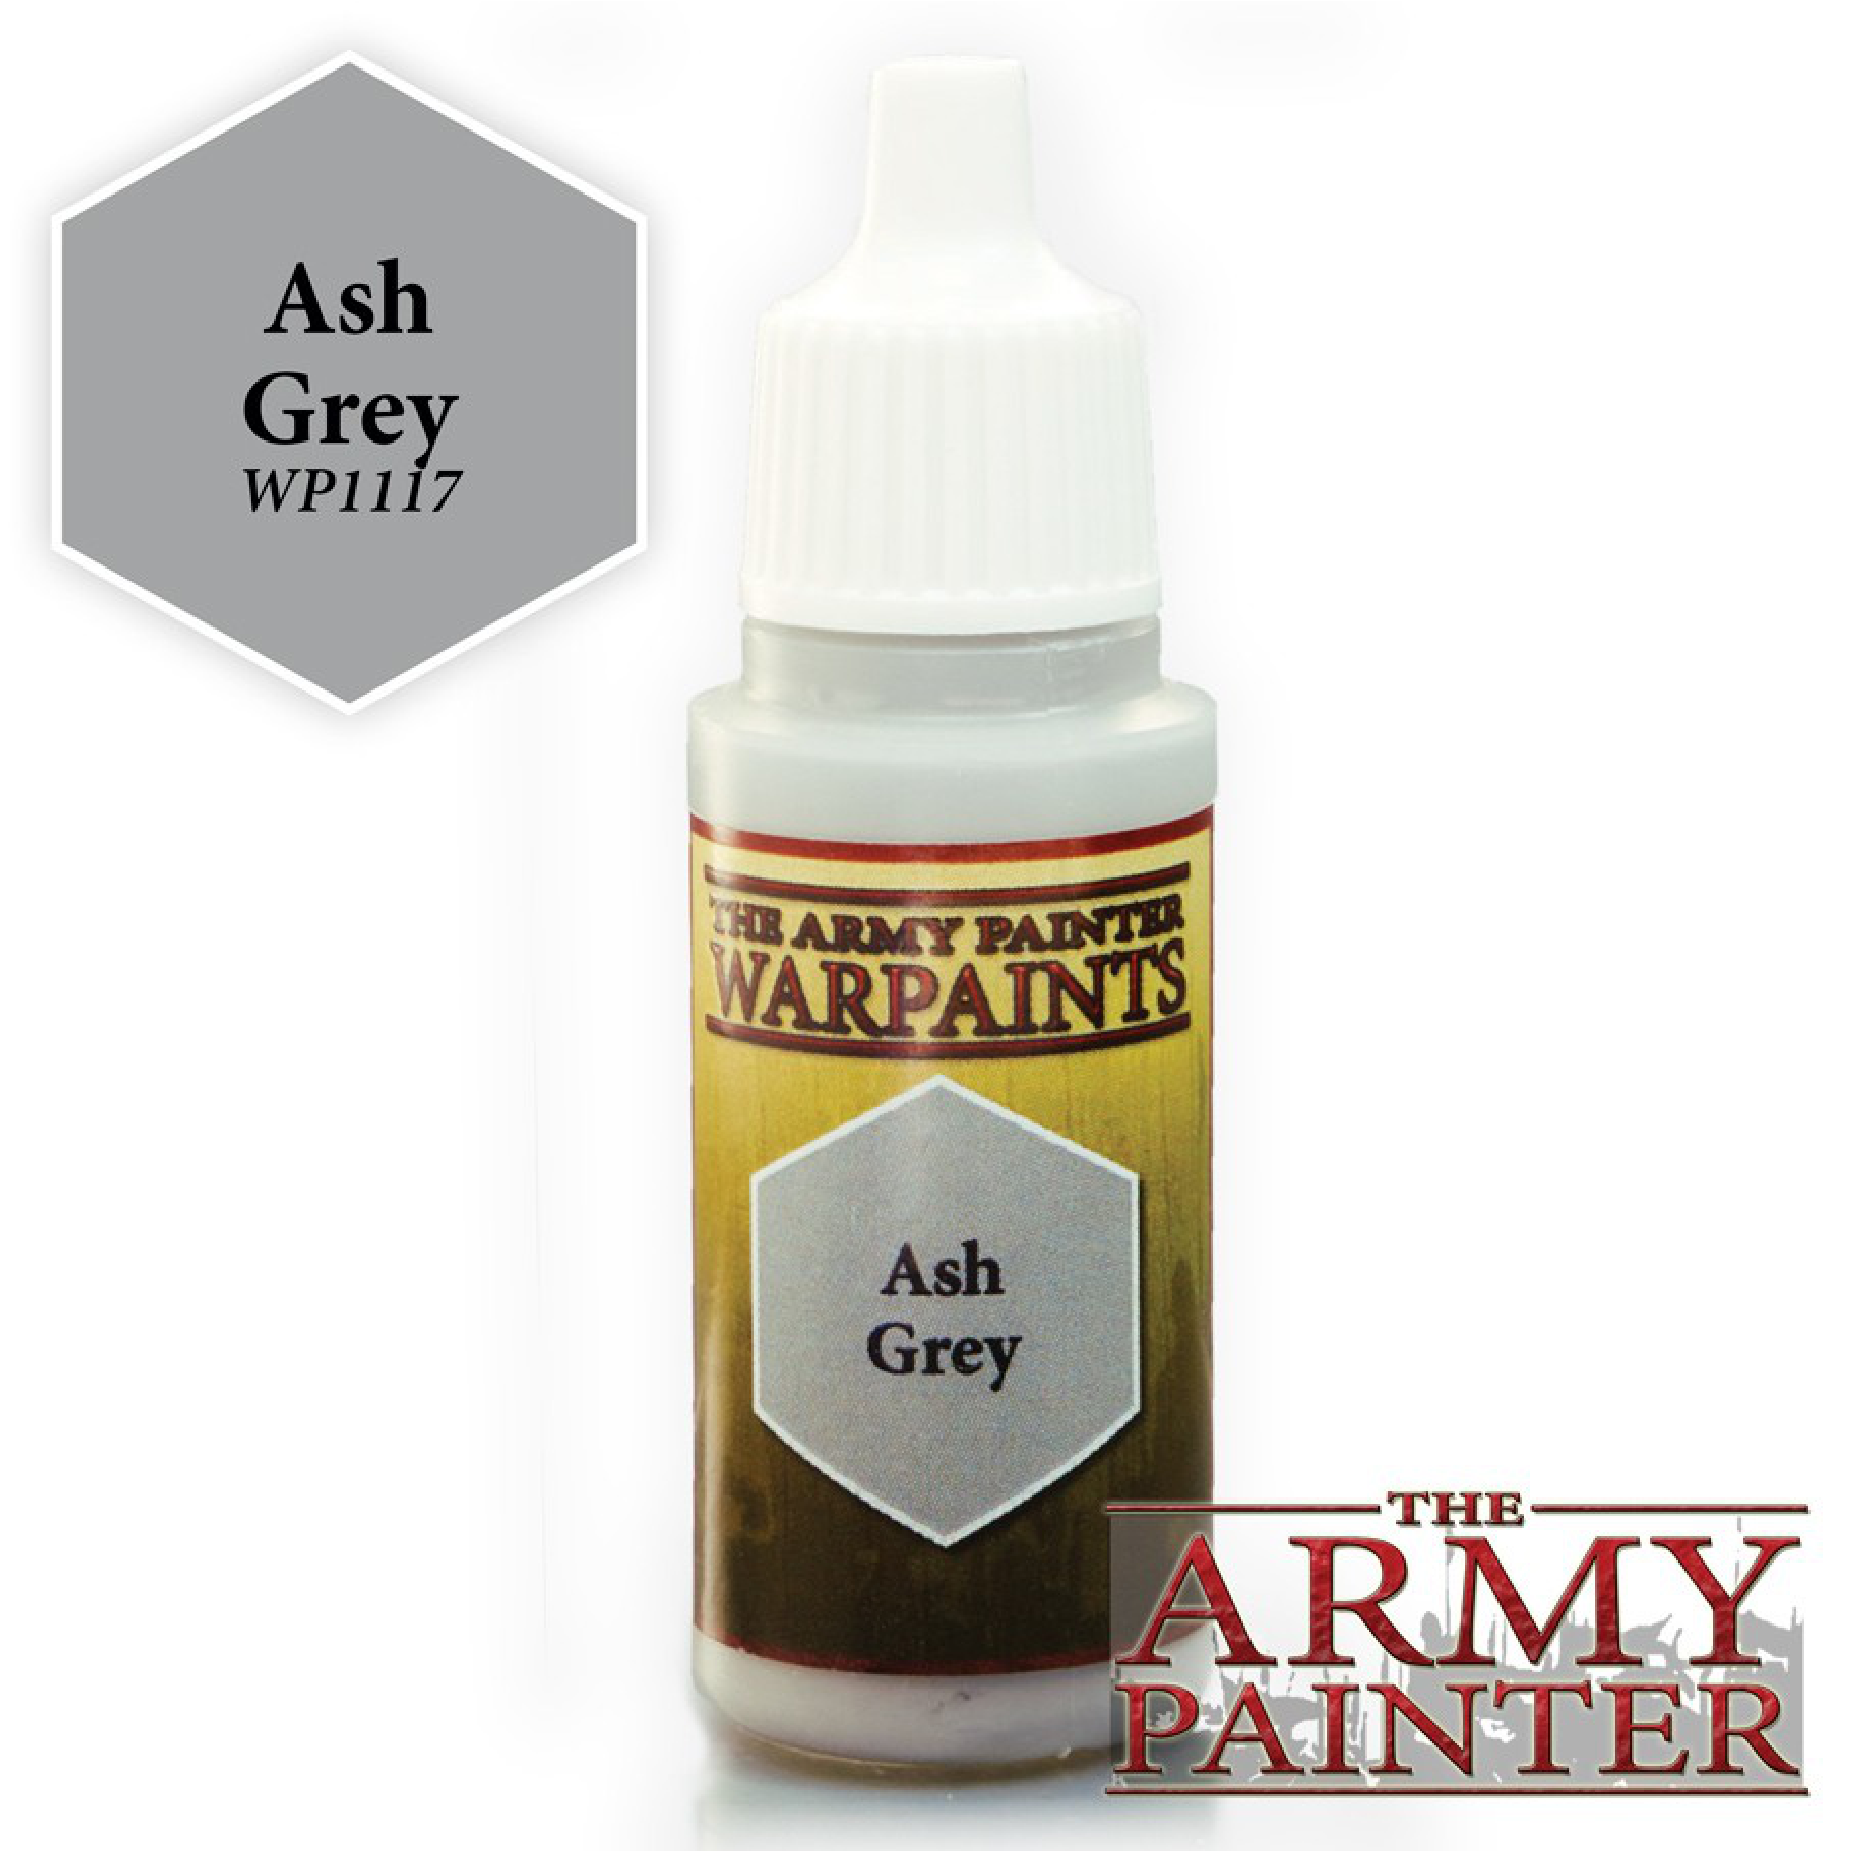 Army Painter Warpaint - Ash Grey